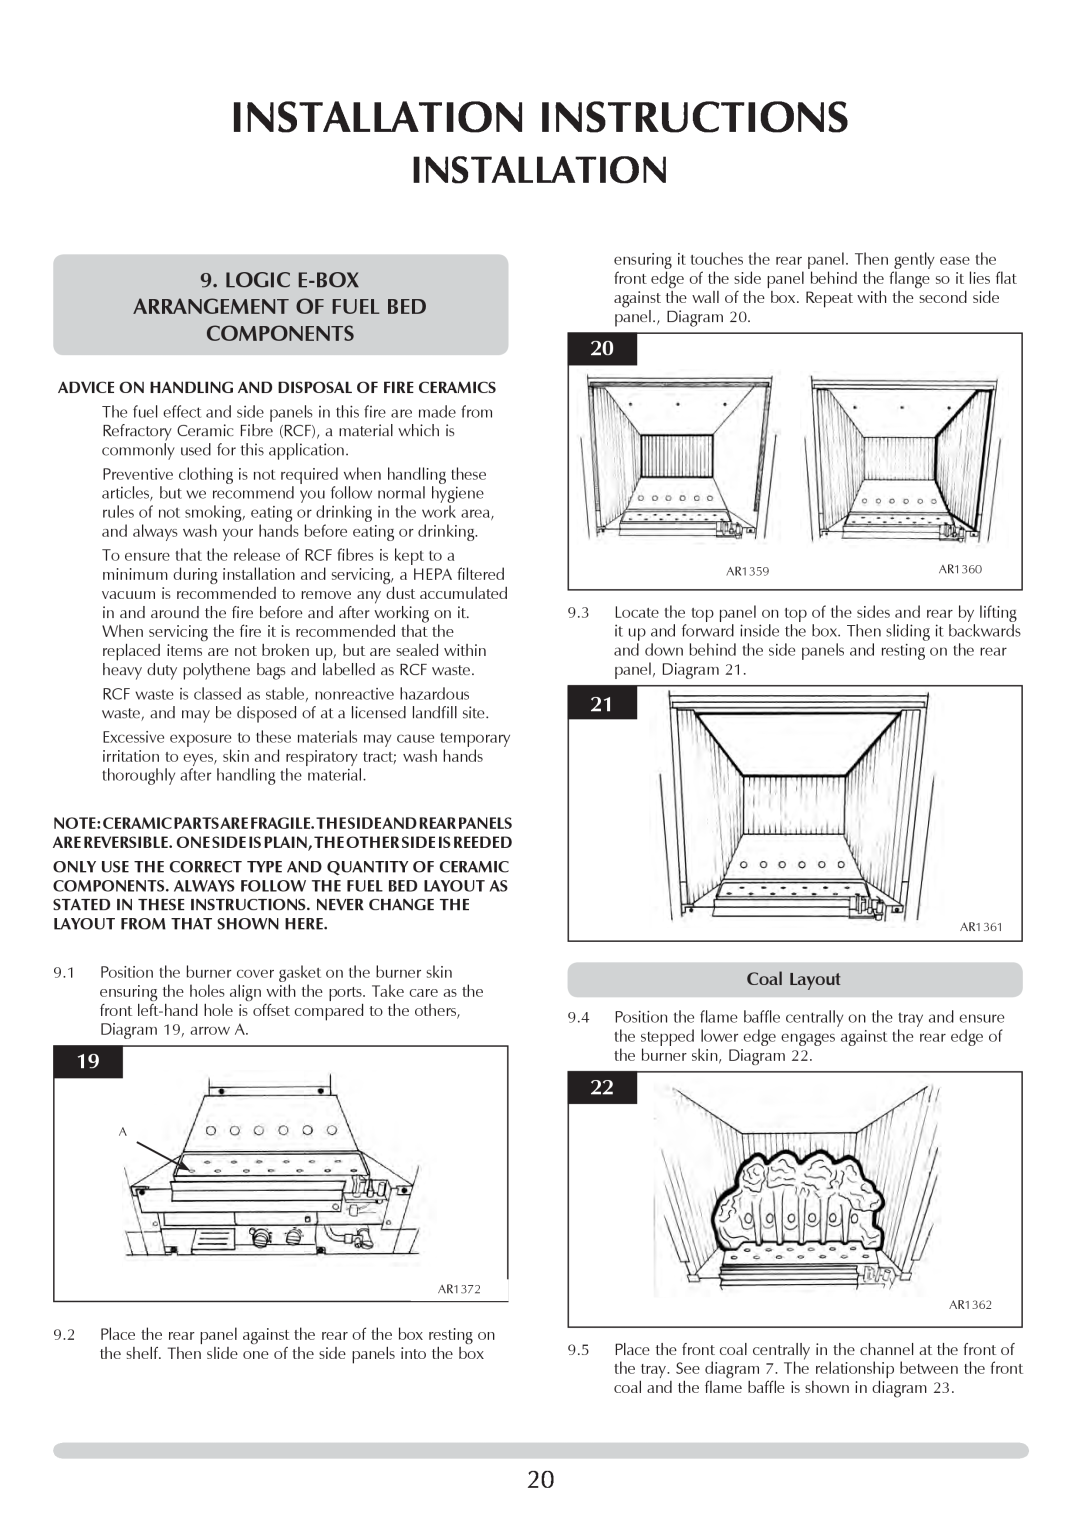 Stovax PR0741 manual Installation Instructions, LOGIC E-BOXarrangEMENT OF fuel bed components, Coal Layout 